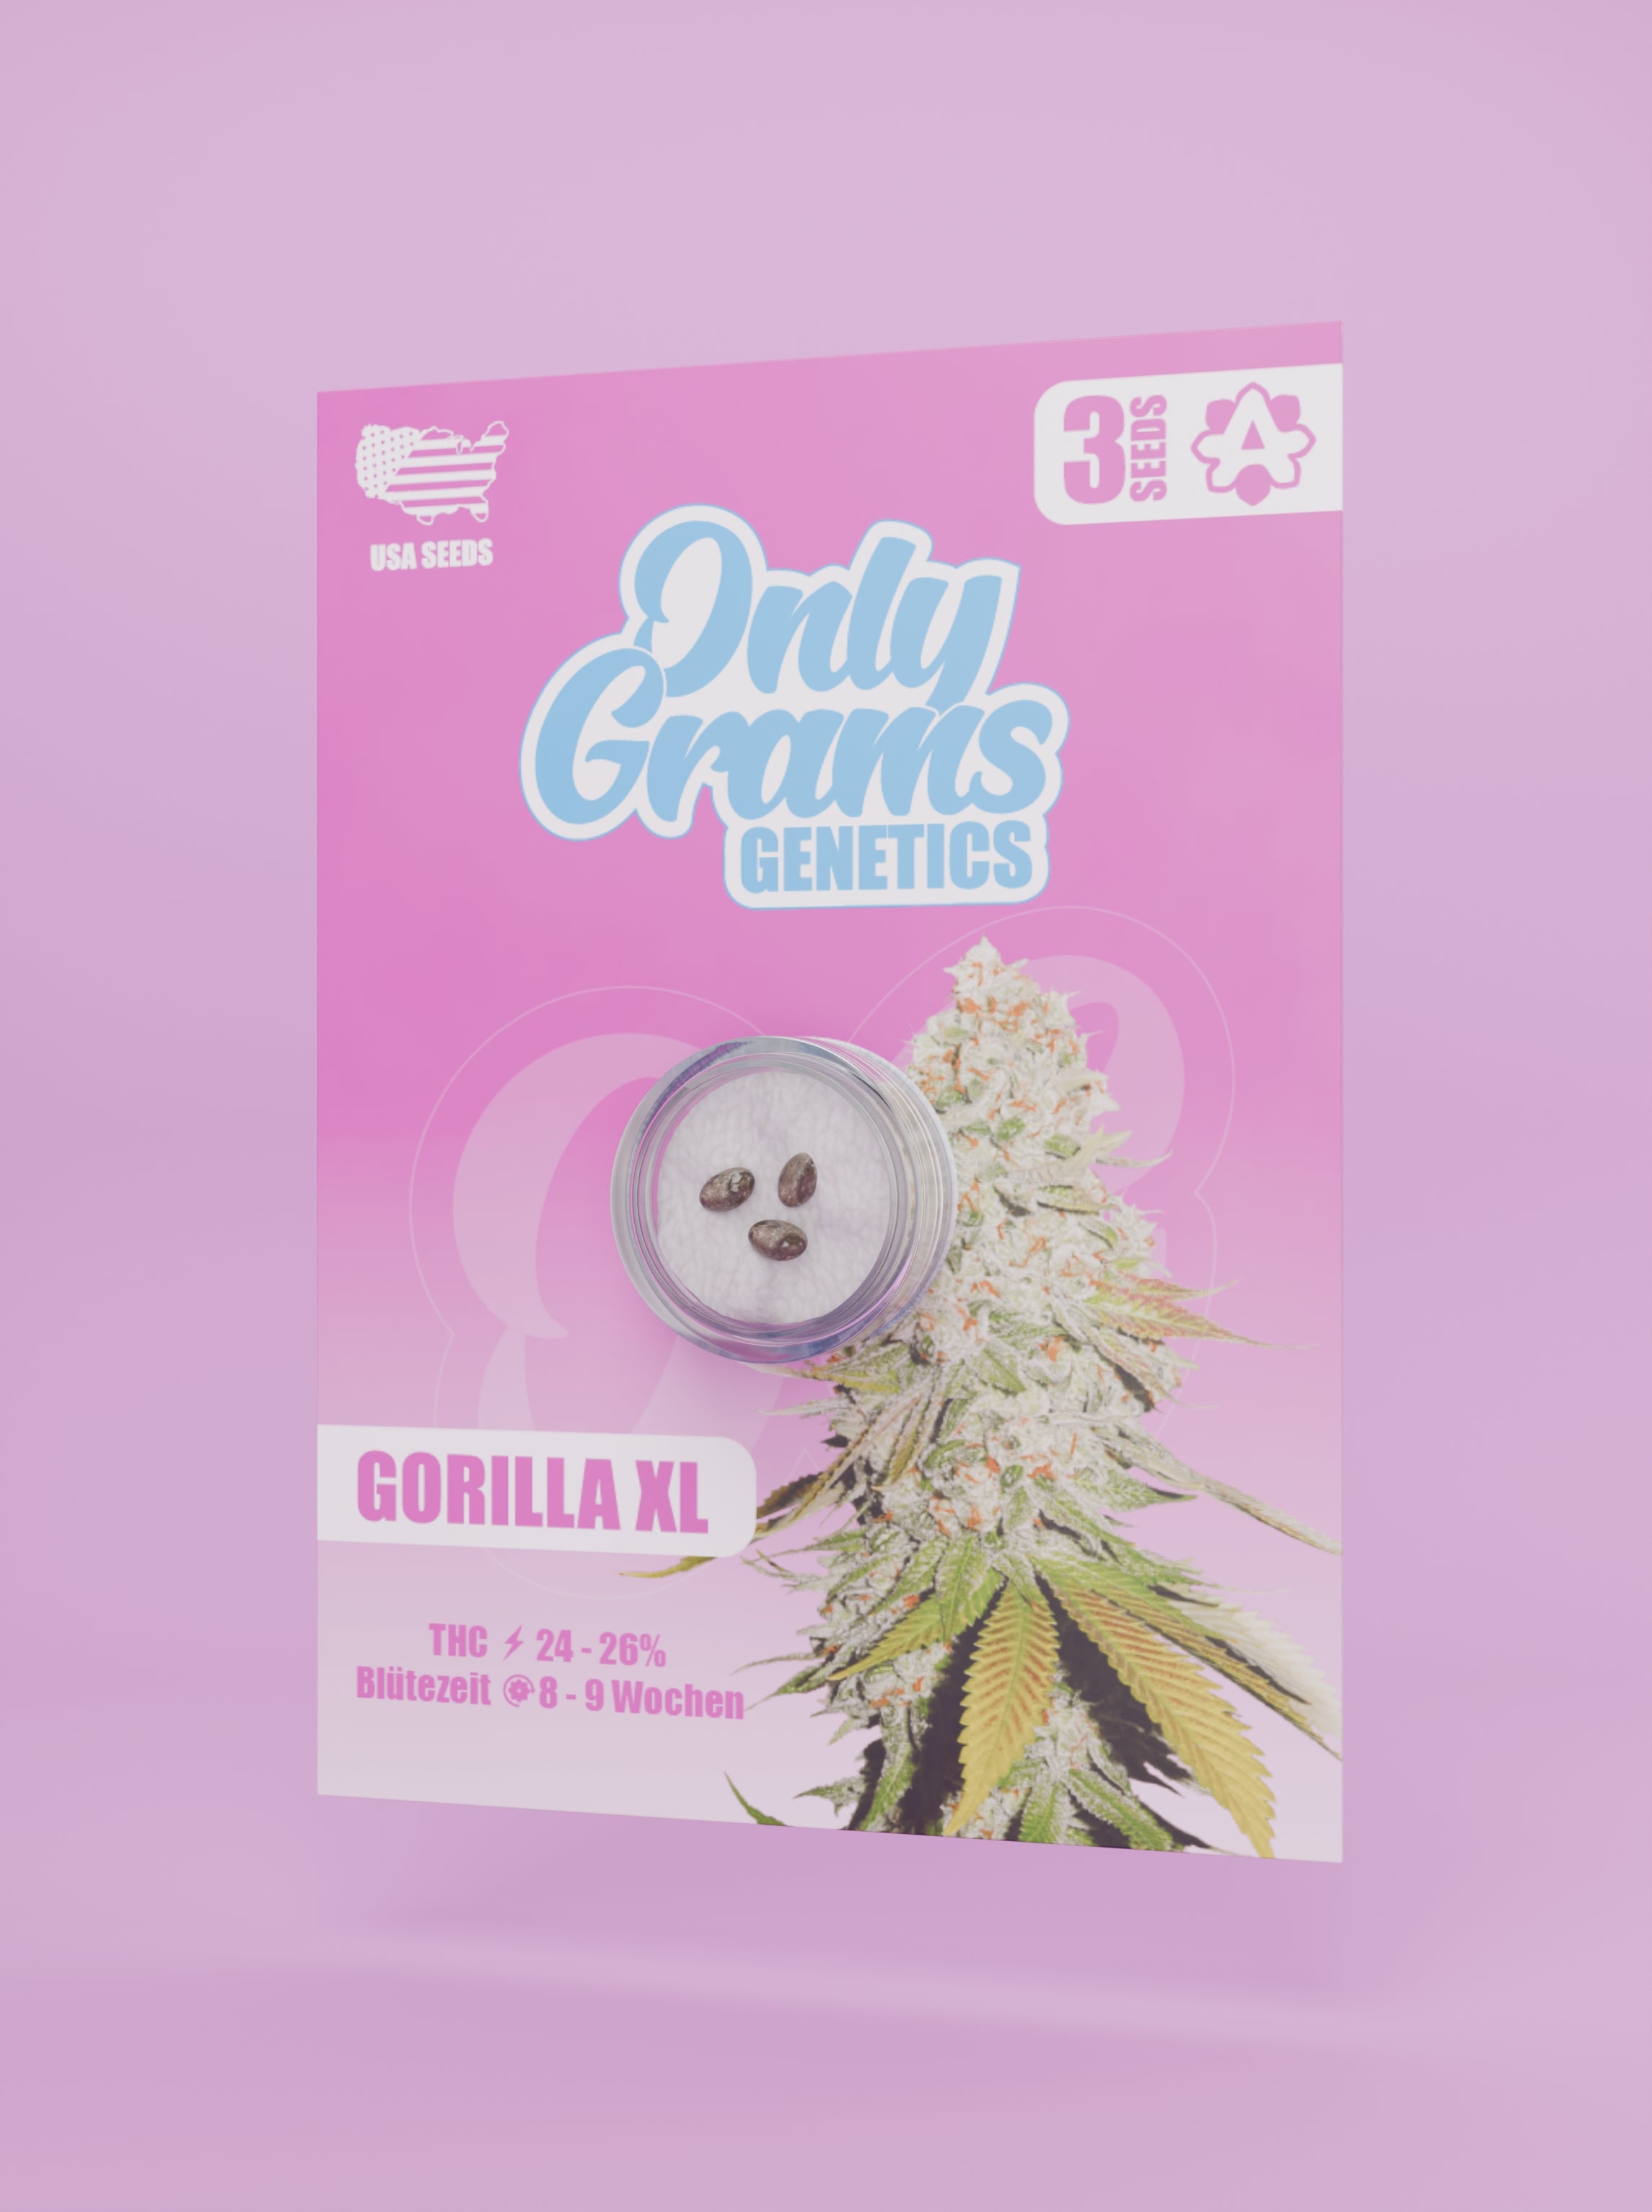 Gorilla XL THC Seeds